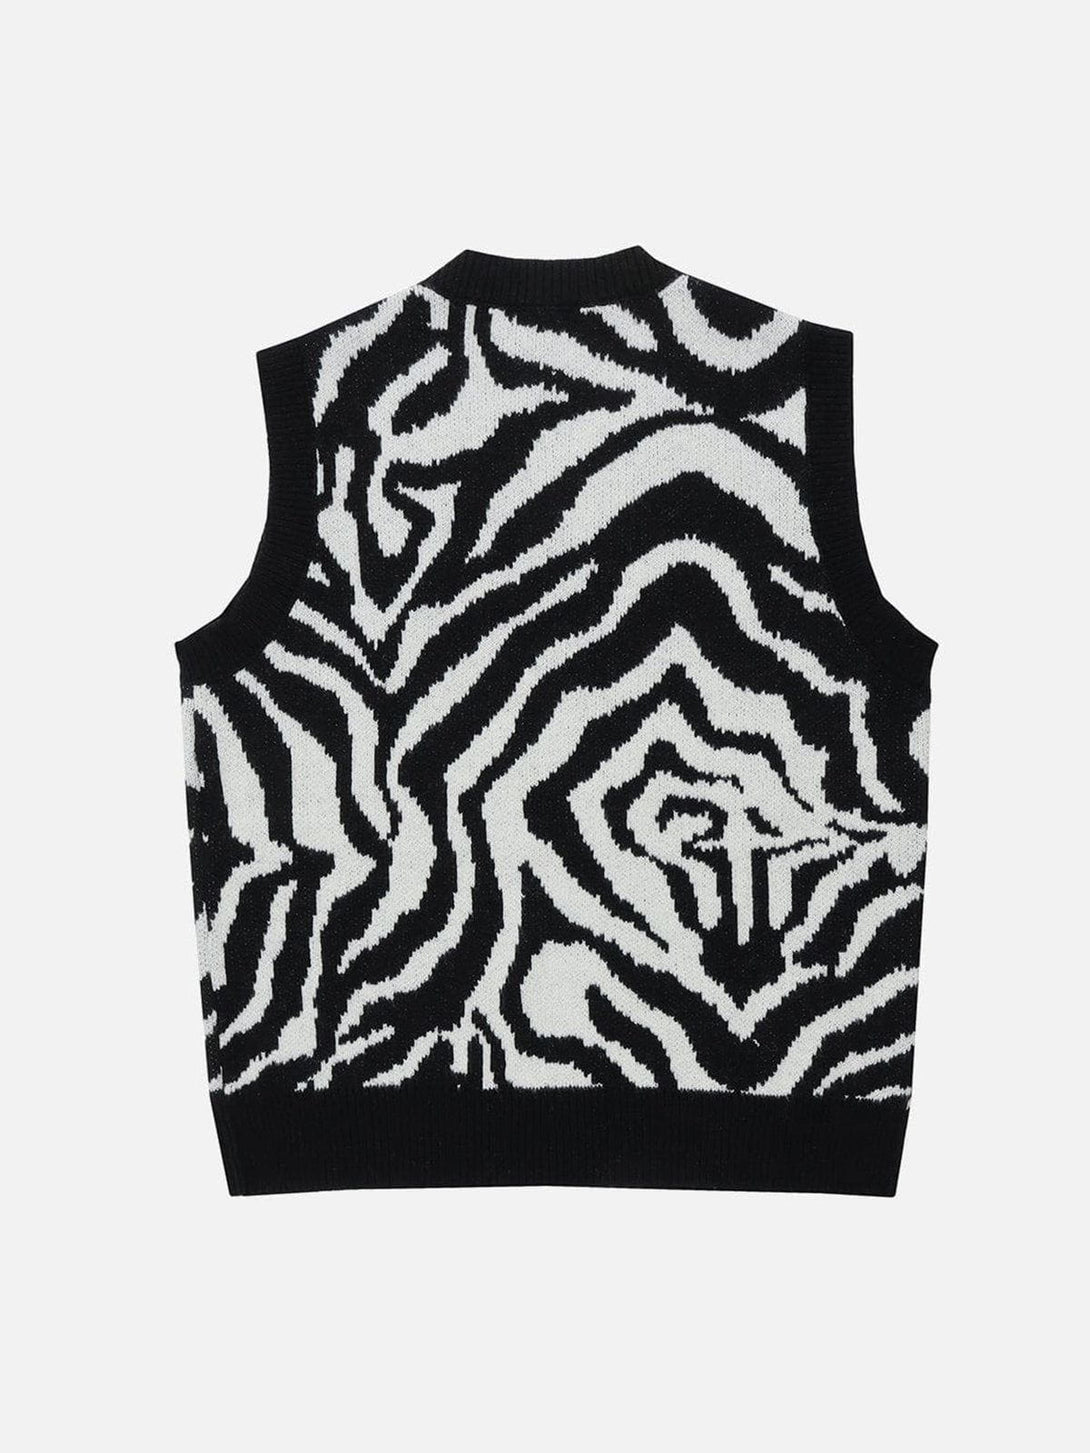 Majesda® - Zebra Pattern Embroidery Sweater Vest outfit ideas streetwear fashion